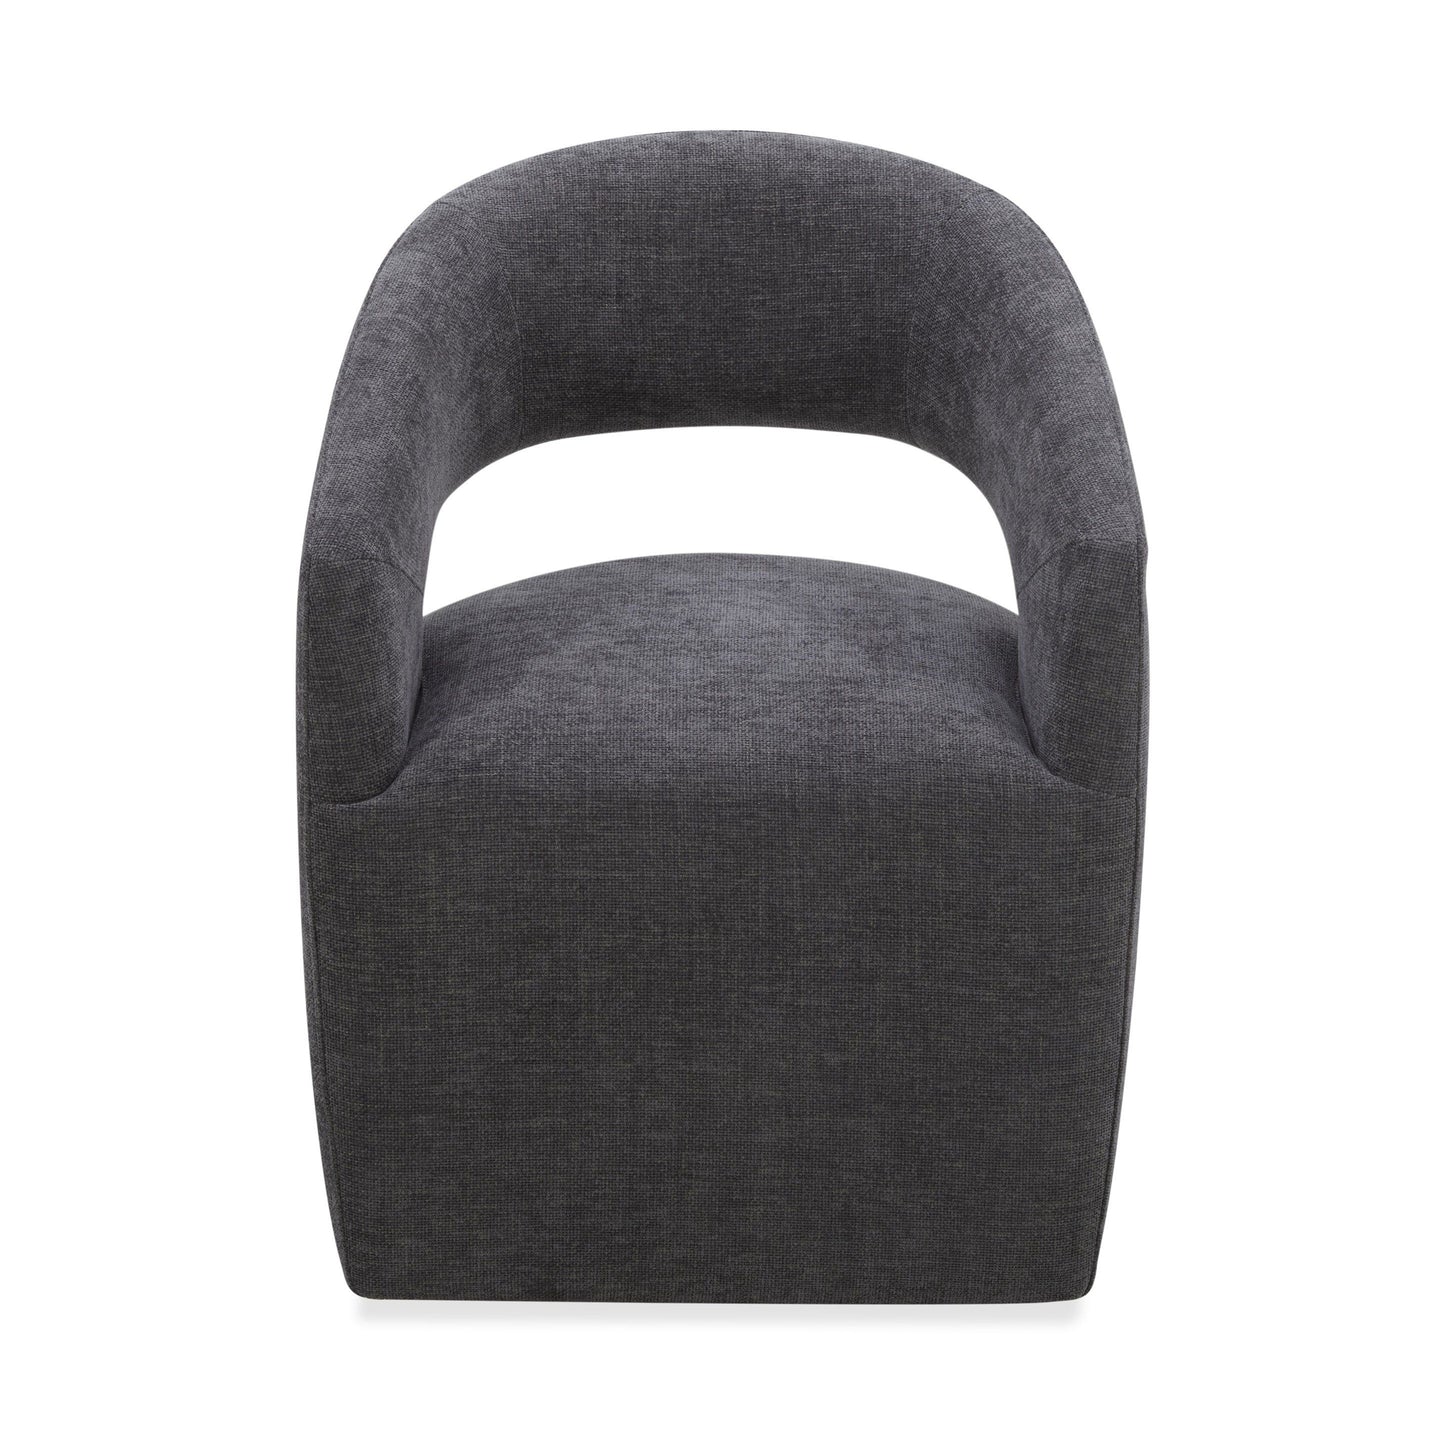 Modrest Angie - Modern Dark Grey Fabric Accent Chair